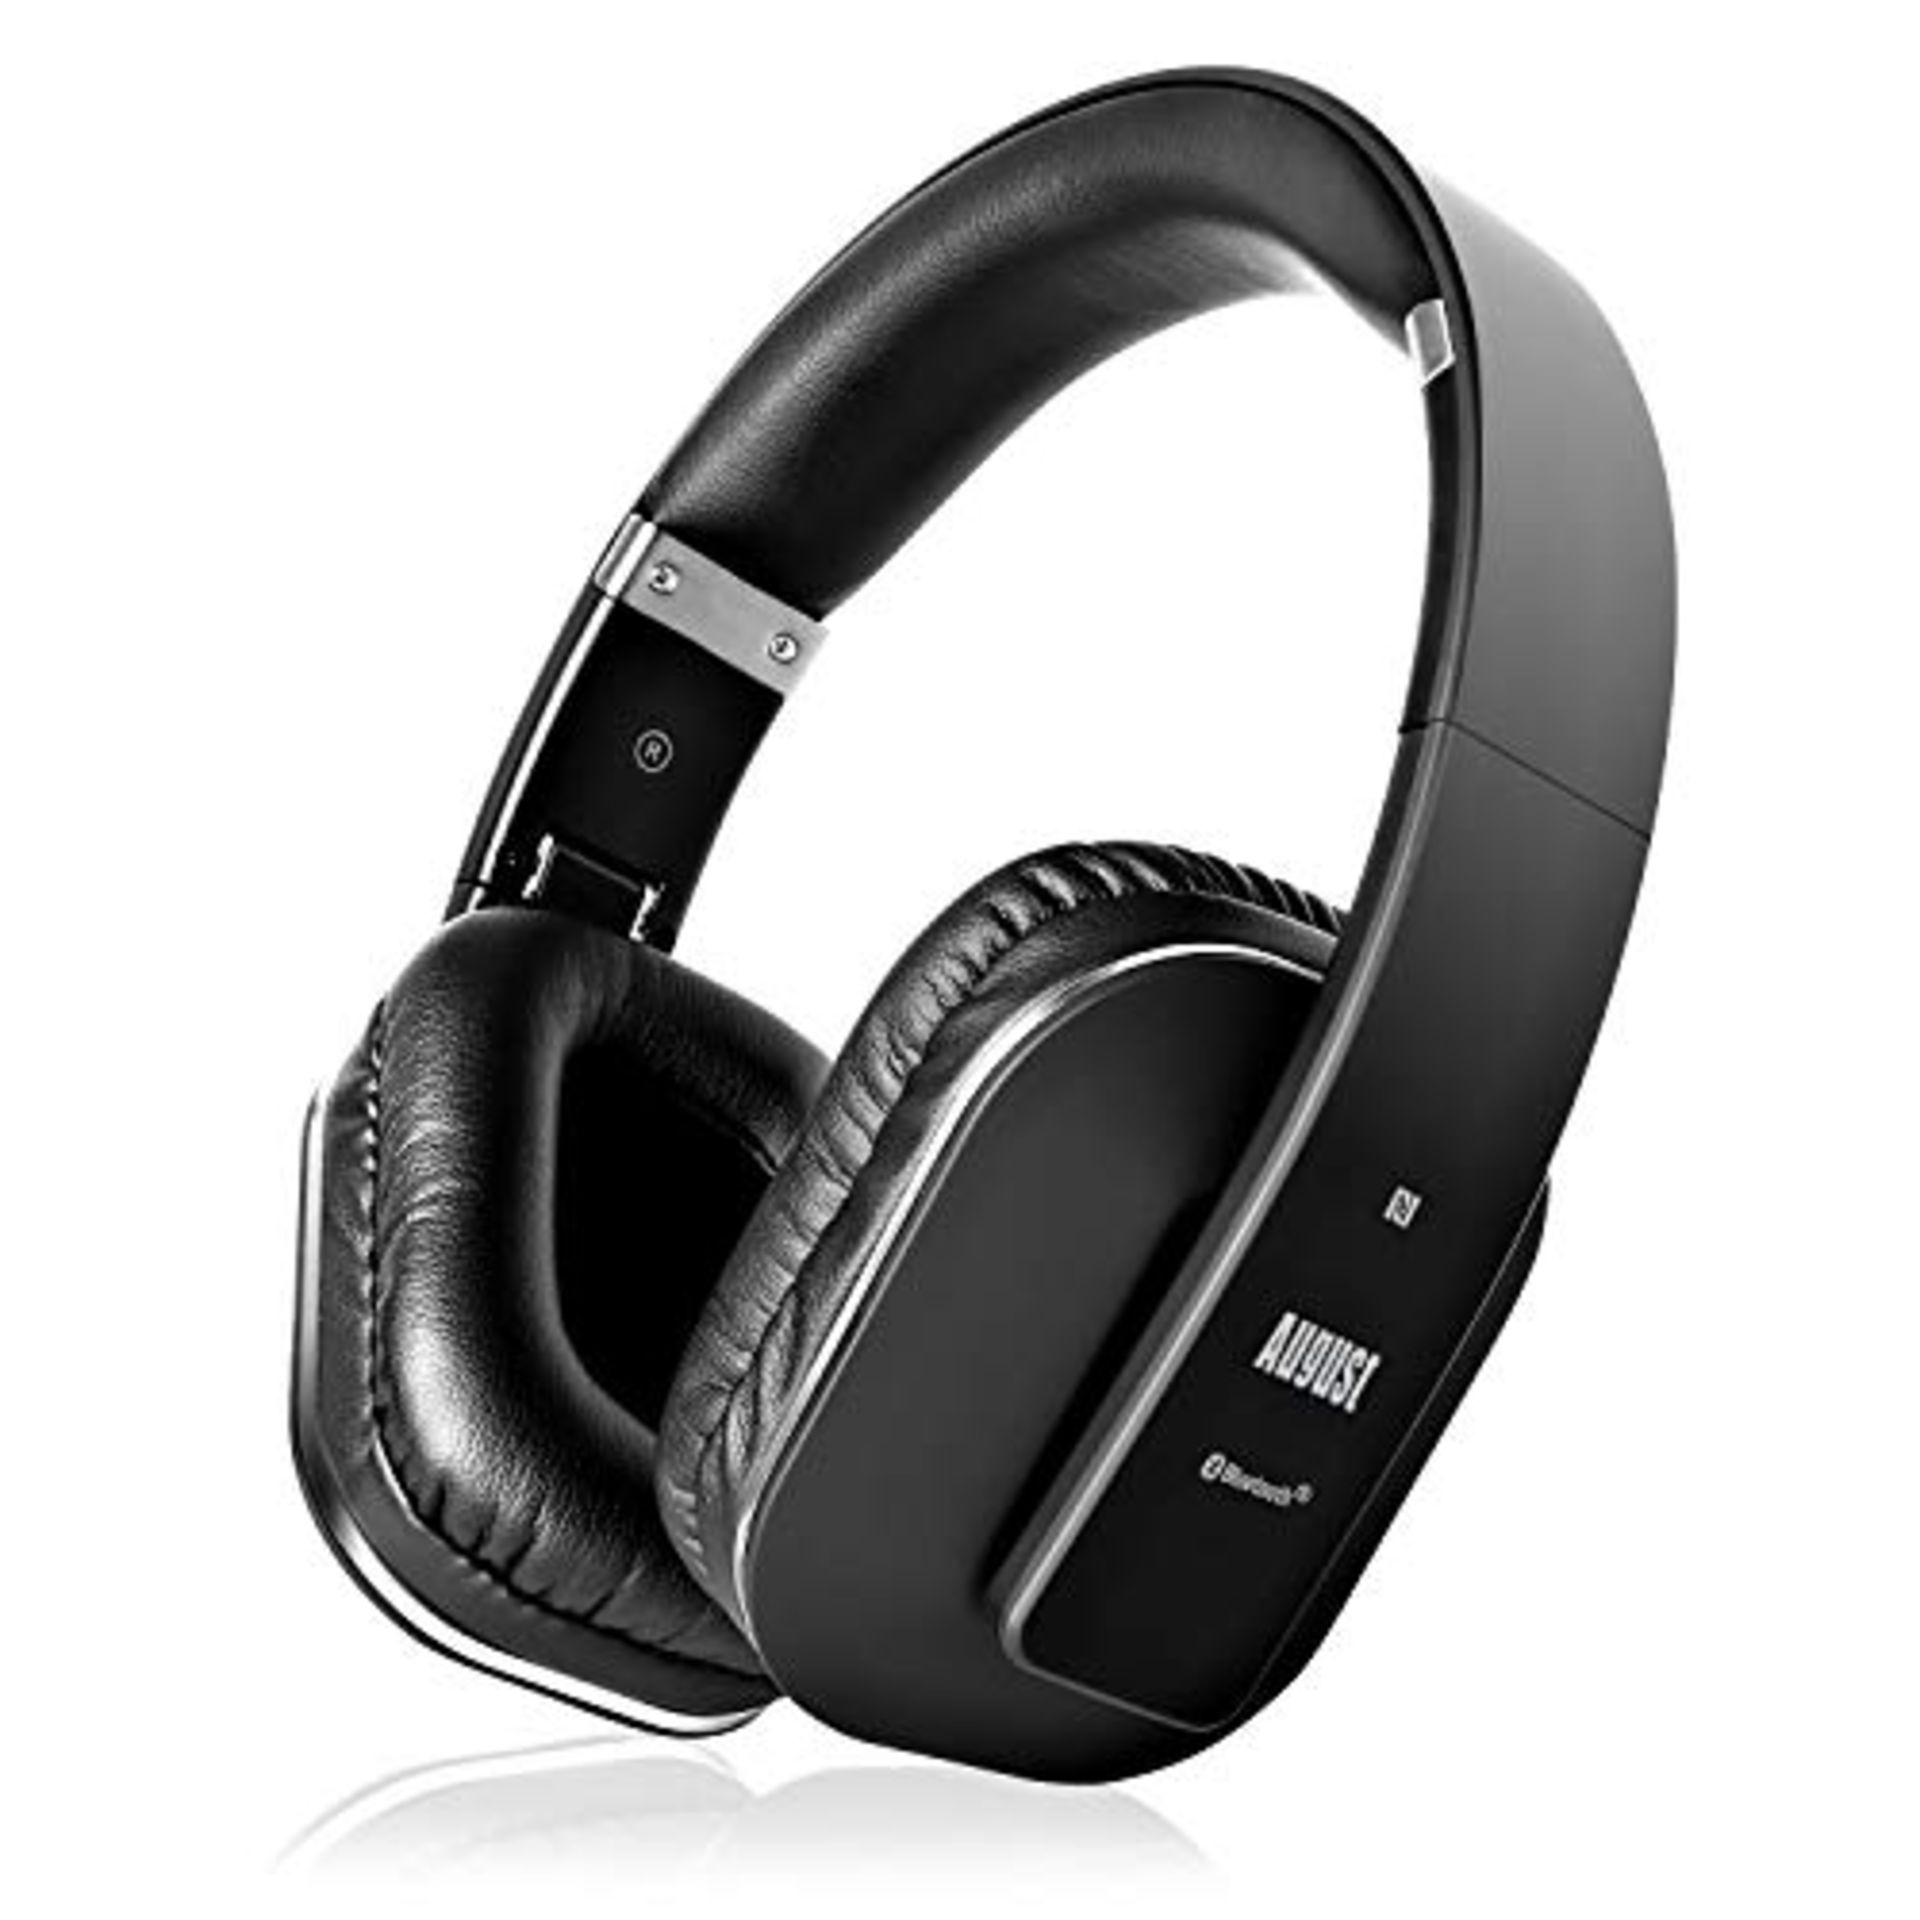 Wireless Bluetooth Headset 4.2 aptX Low Latency - August EP650 - Over Ear, Lightweight